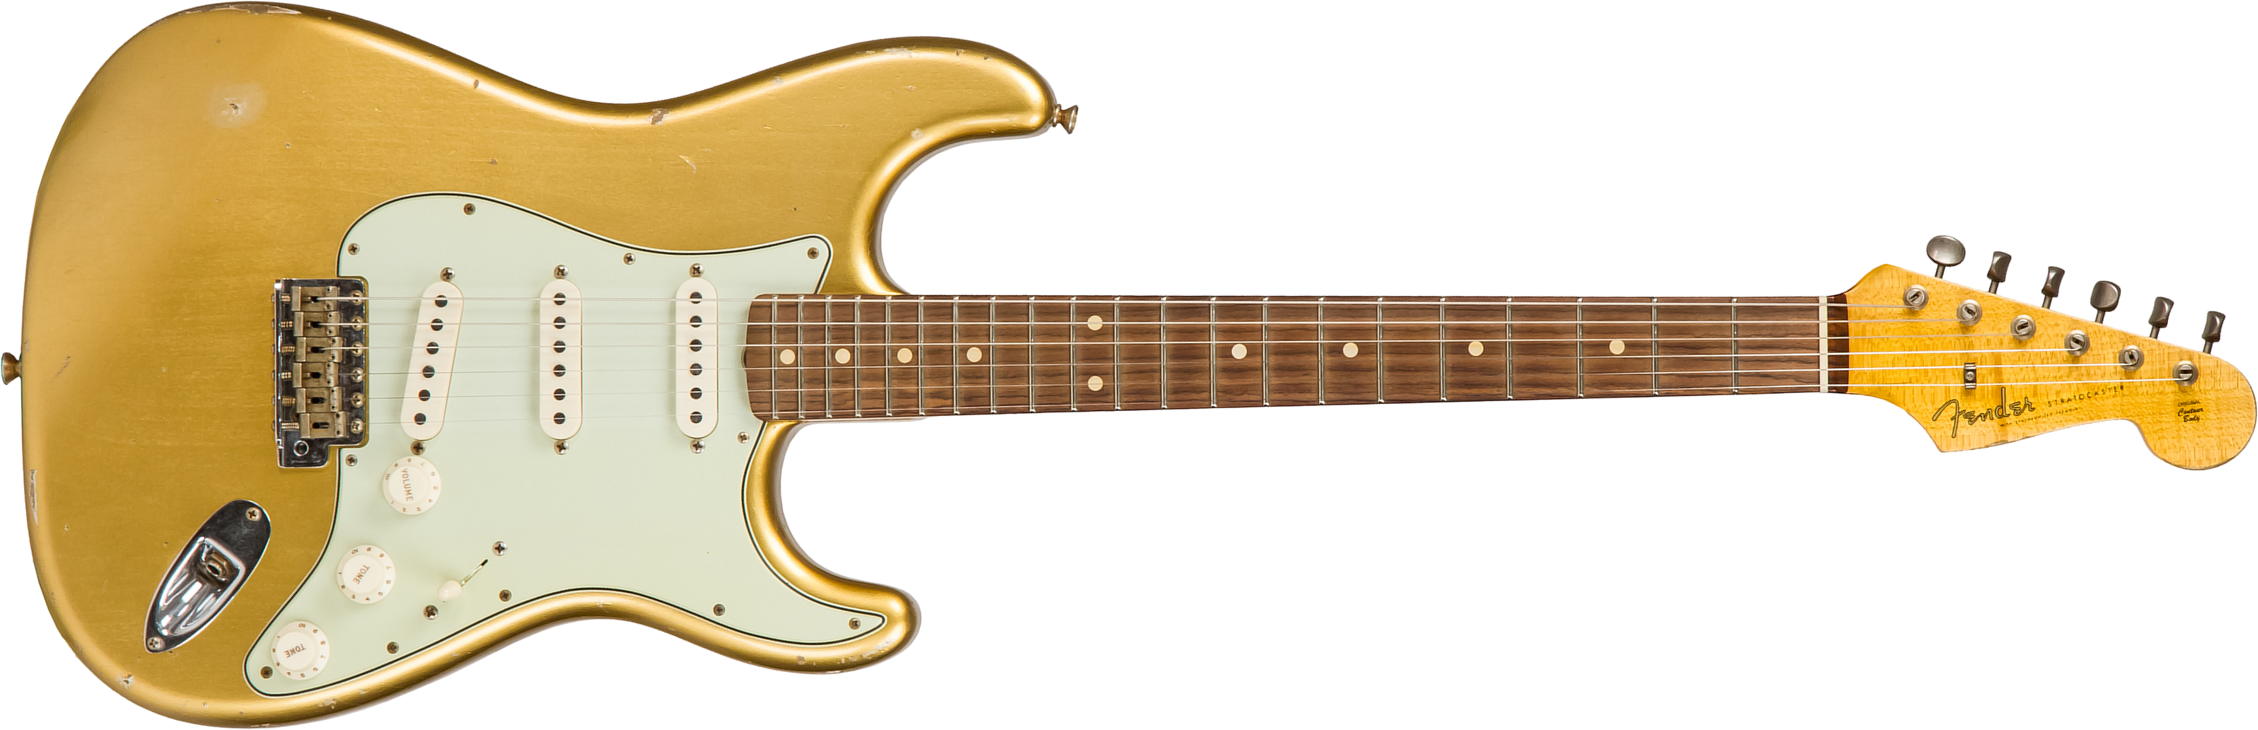 Fender Custom Shop Strat 1960 Rw #cz544406 - Relic Aztec Gold - Str shape electric guitar - Main picture